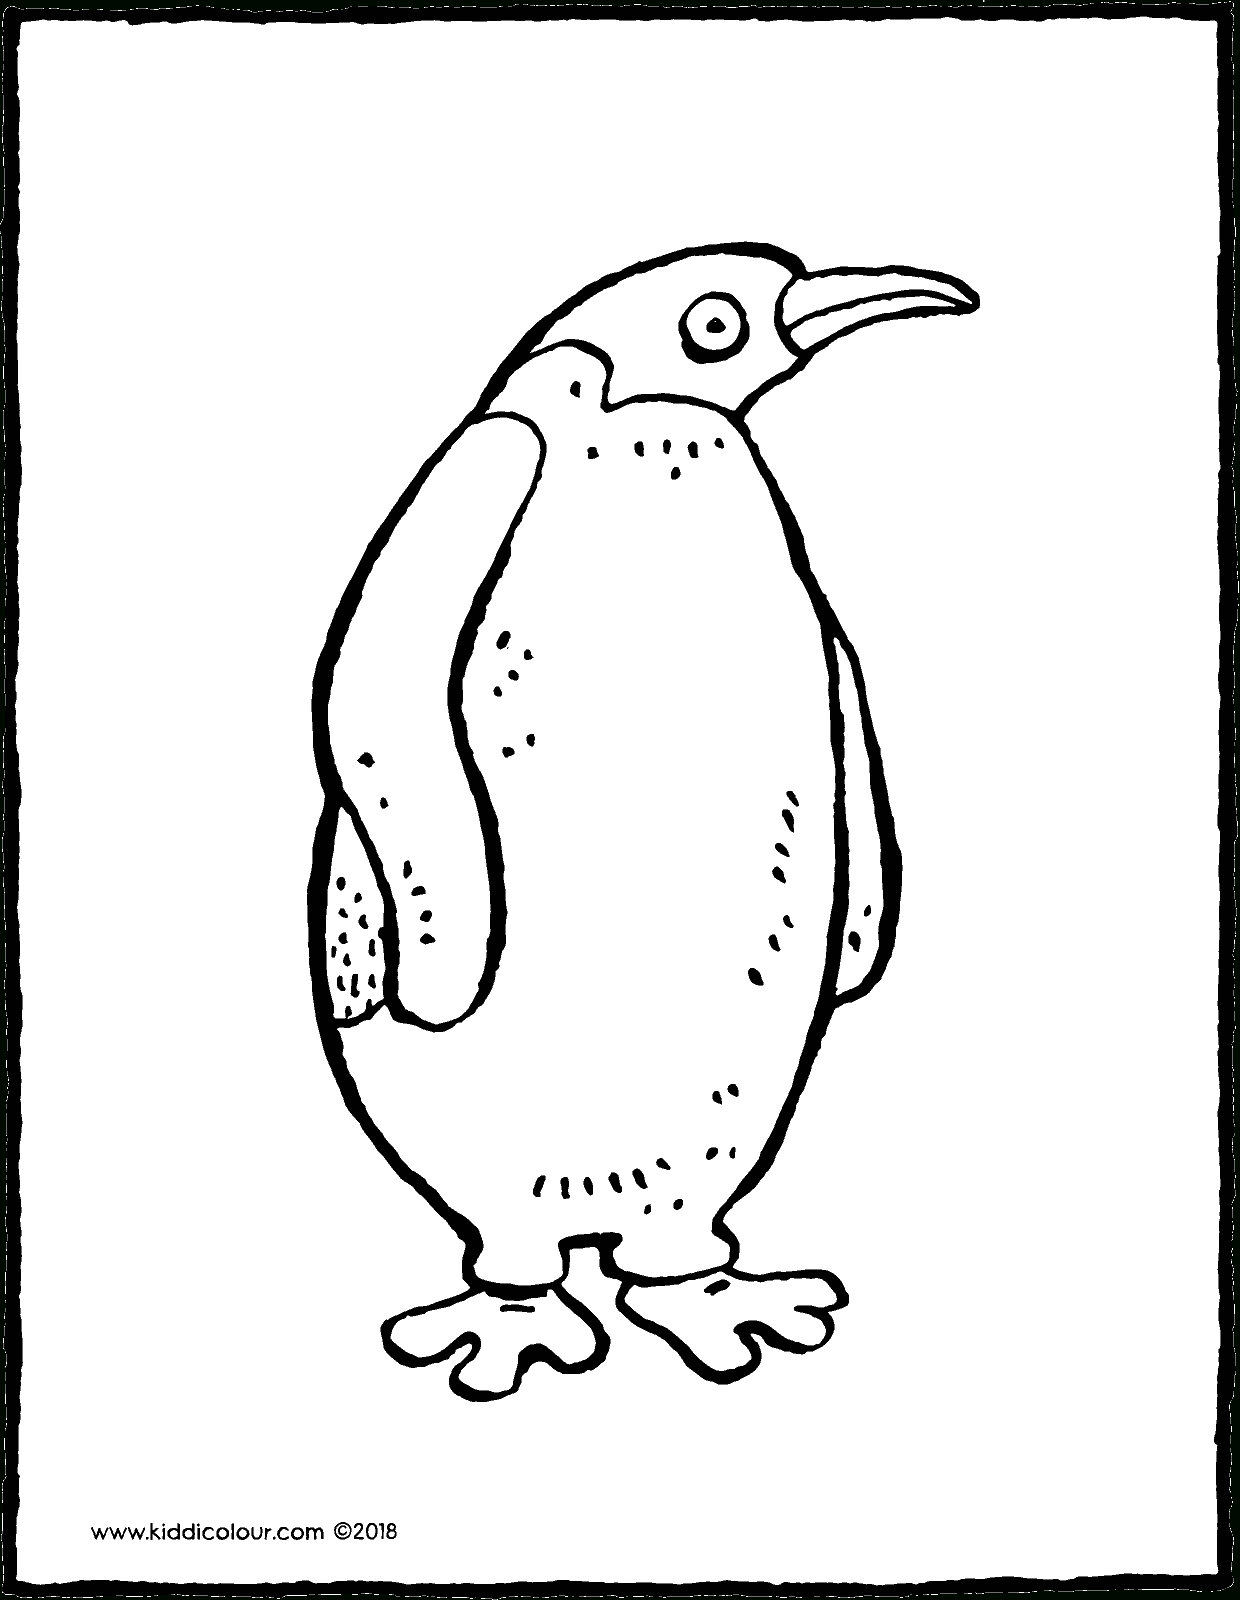 Pinguin - Kiddimalseite ganzes Ausmalbilder Pinguine